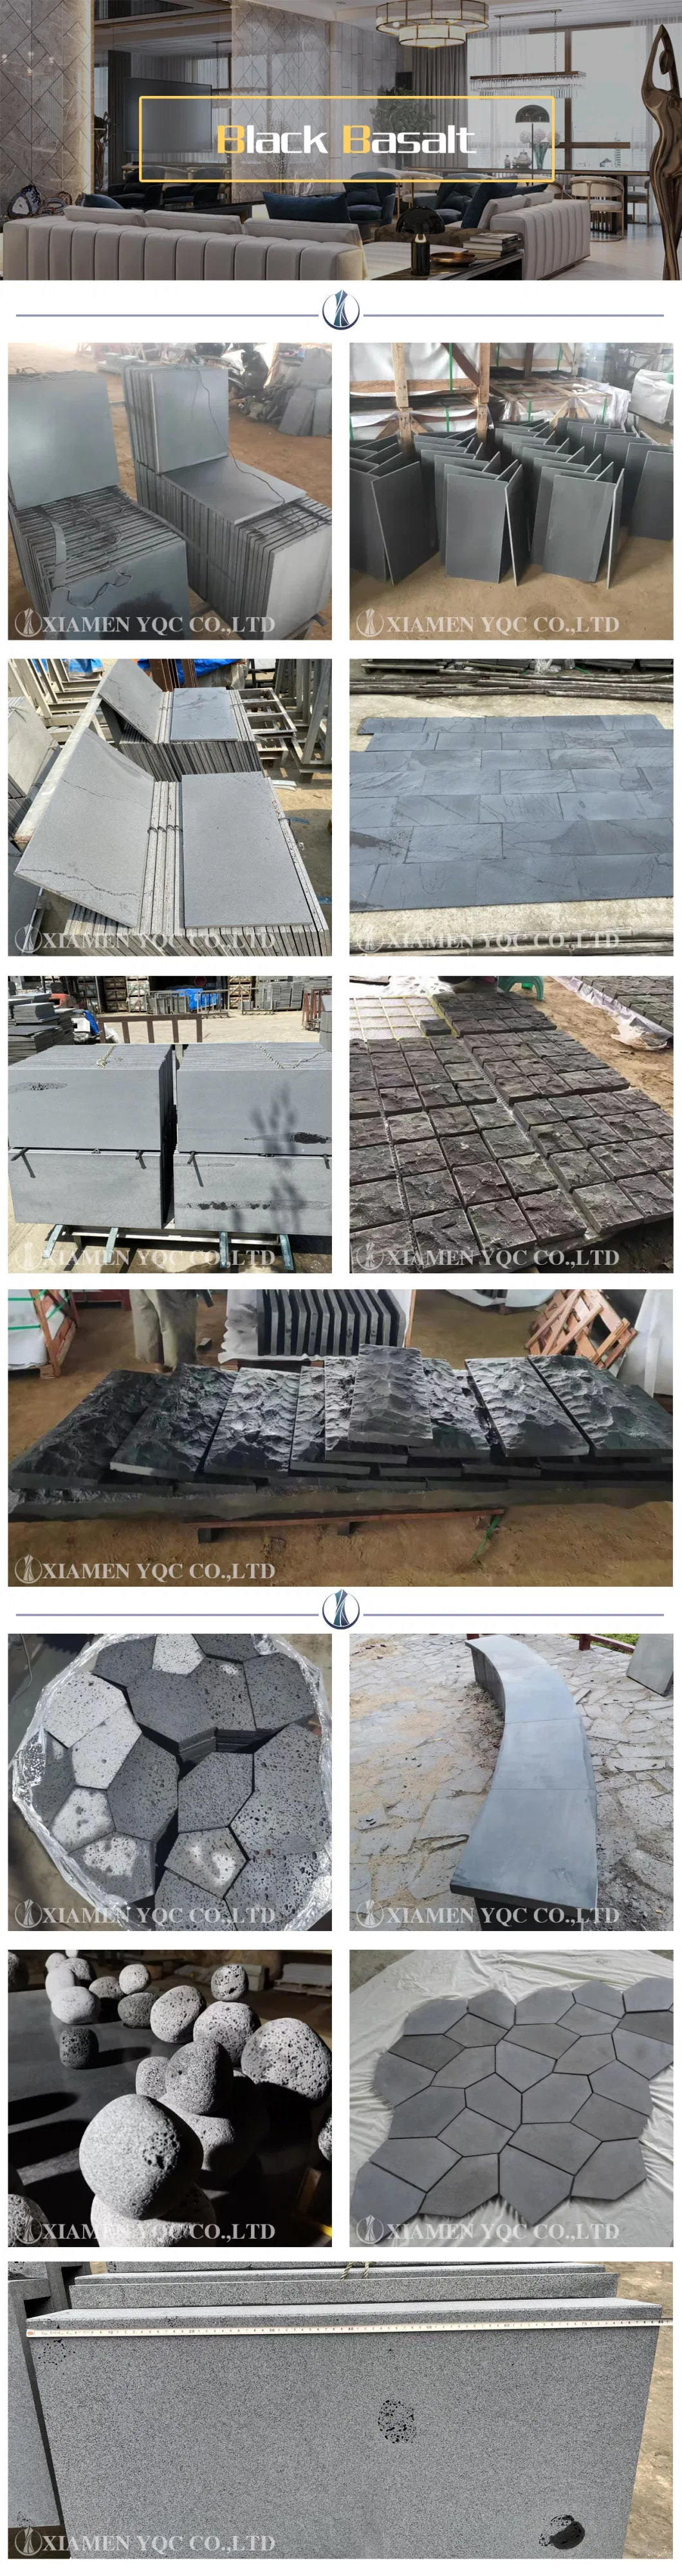 Hainan Honed Dark Grey/Black Lava Blue Stone Tile Basalt Swimming Pool Coping for Paving/Kerbstone/Wall/Flooring/Covering Price